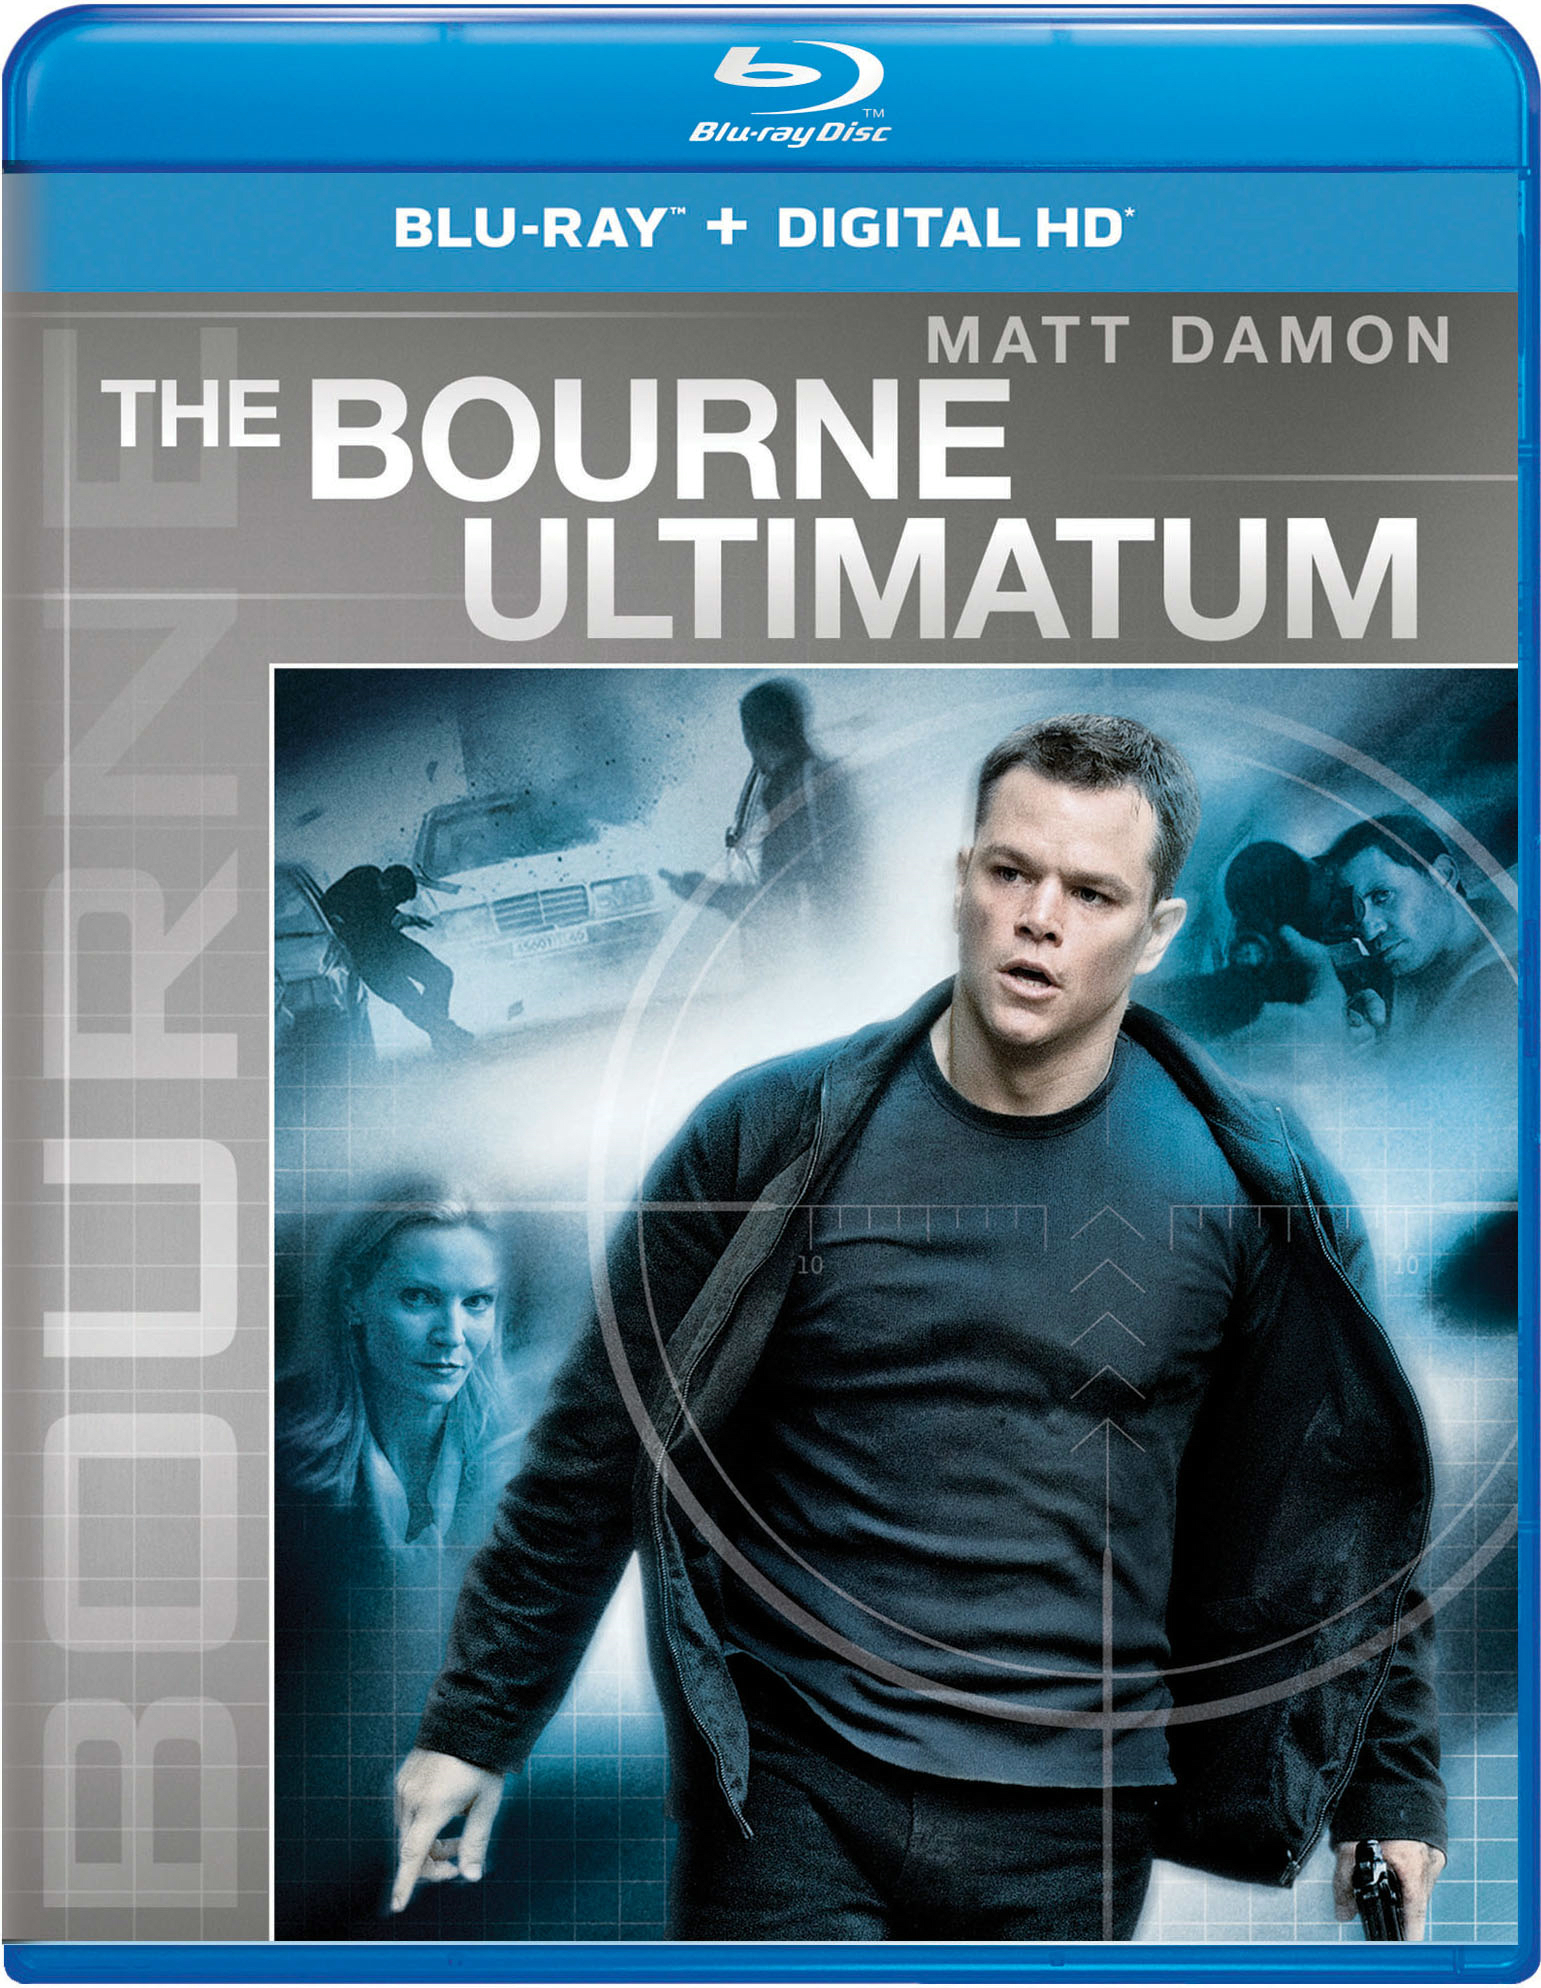 The Bourne Ultimatum (Blu-ray New Box Art) - Blu-ray [ 2007 ]  - Thriller Movies On Blu-ray - Movies On GRUV